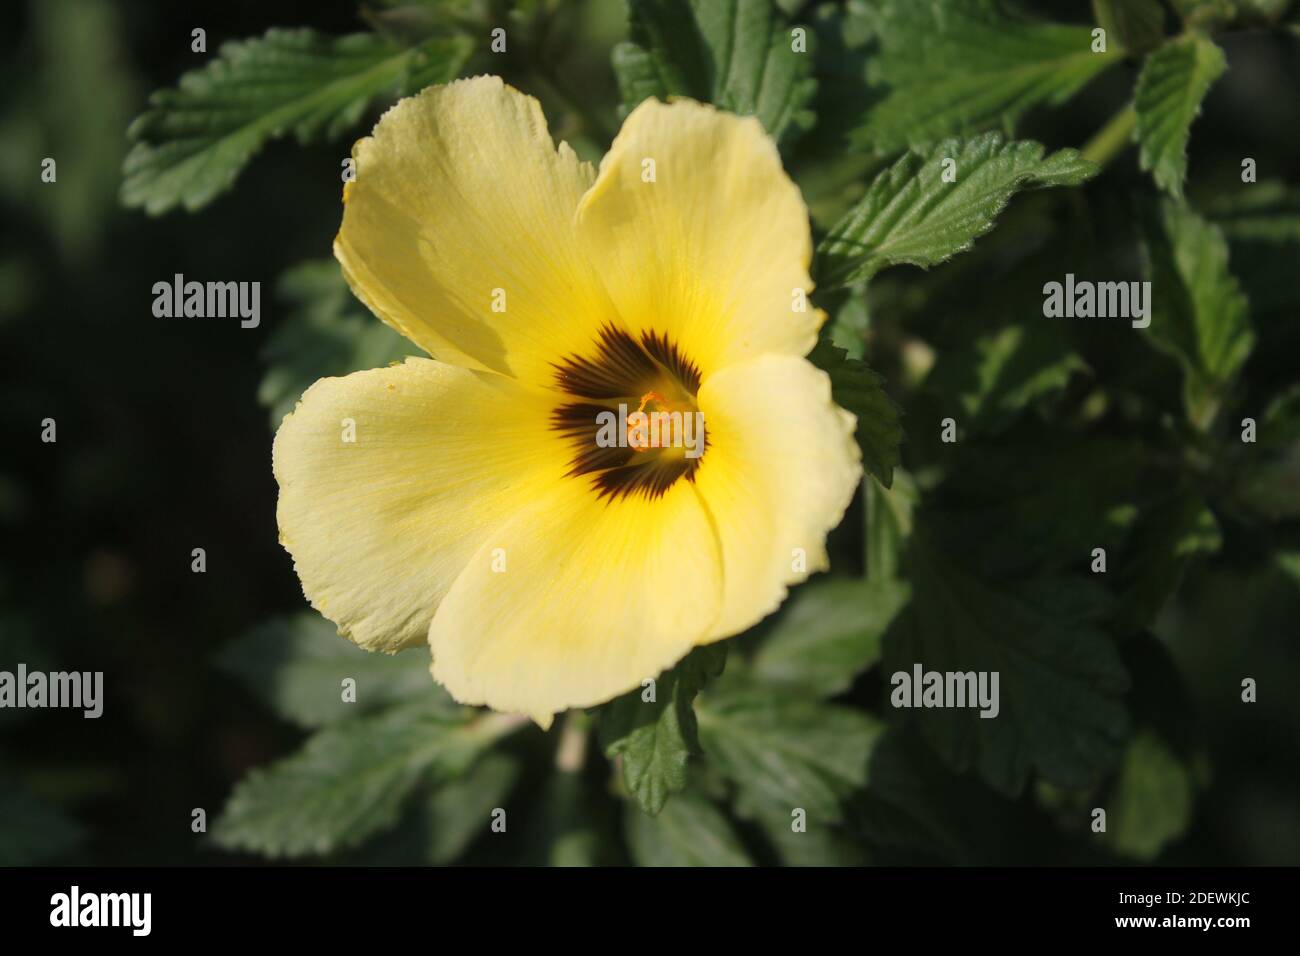 close up of a white buttercup in a green garden, yellow flower in a green garden. Stock Photo